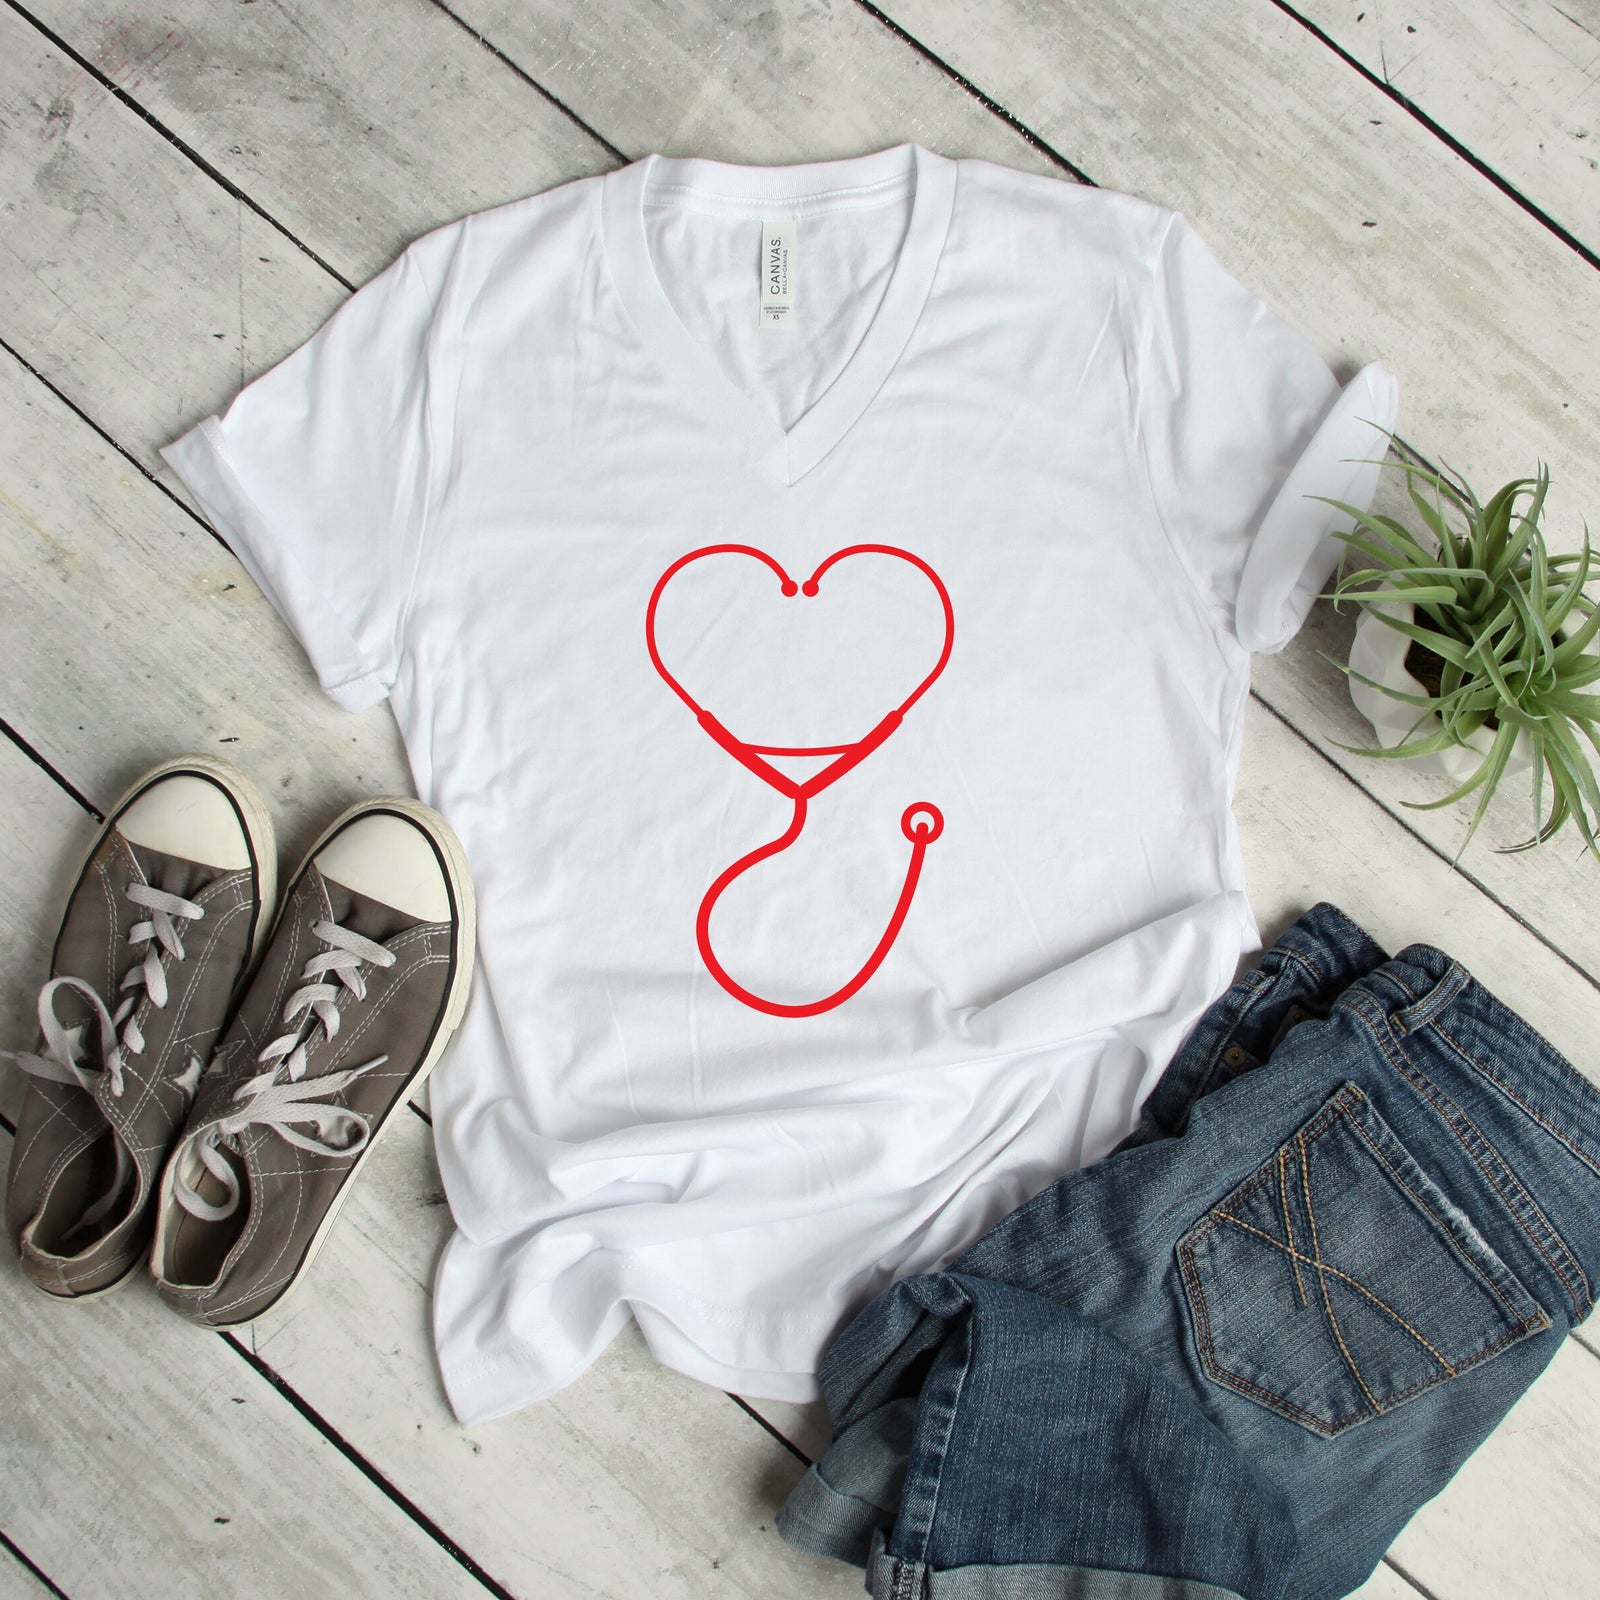 Heart Shaped Stethoscope T Shirt - Cute Valentine Shirt - Unisex Adult Valentine's Day Shirt - Medical Nurse Doctor